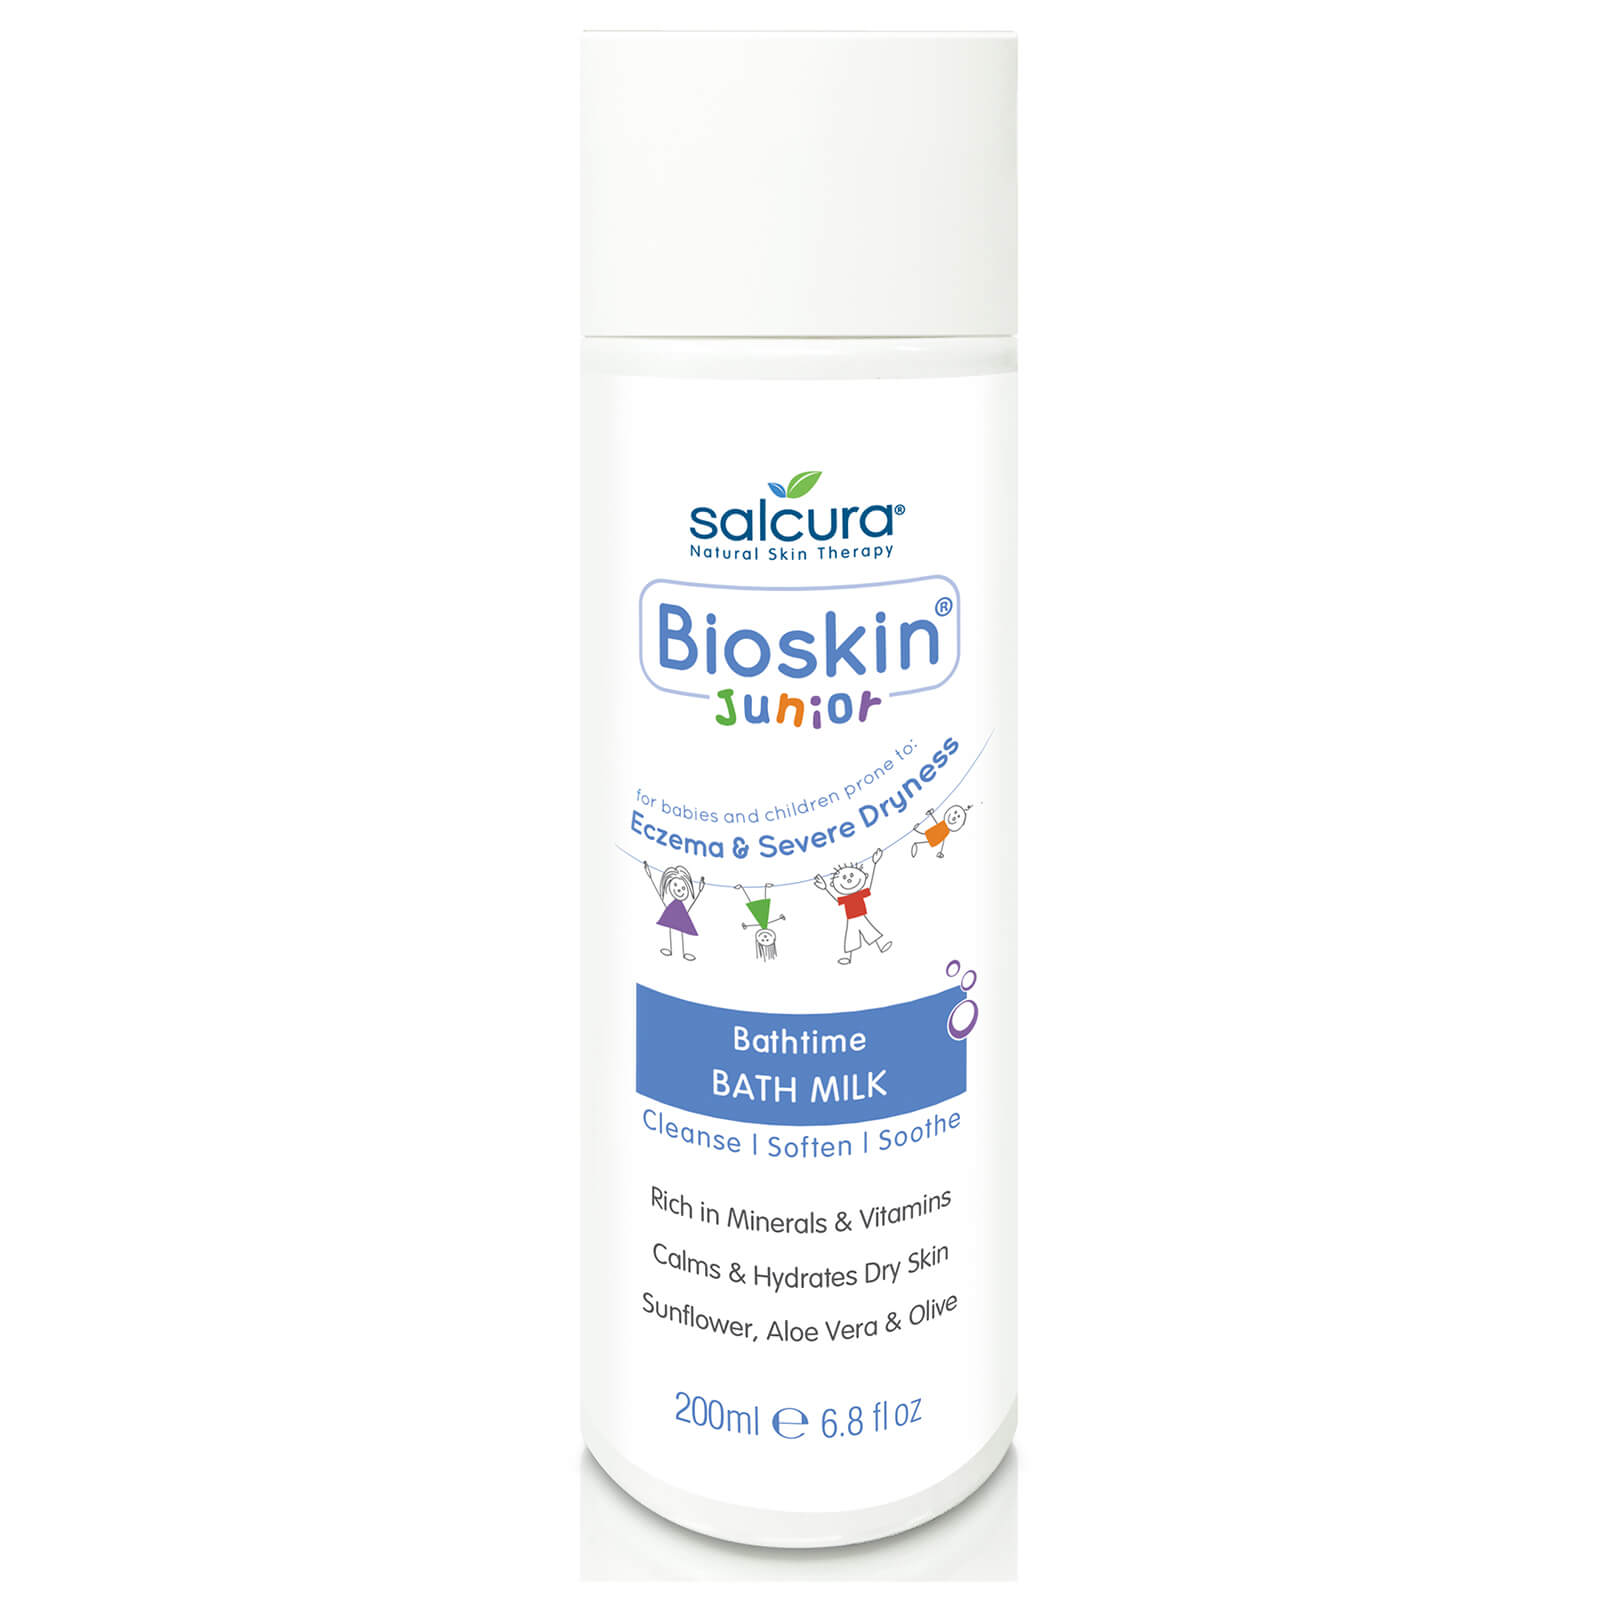 Leche de baño Bioskin Junior de Salcura (300 ml)